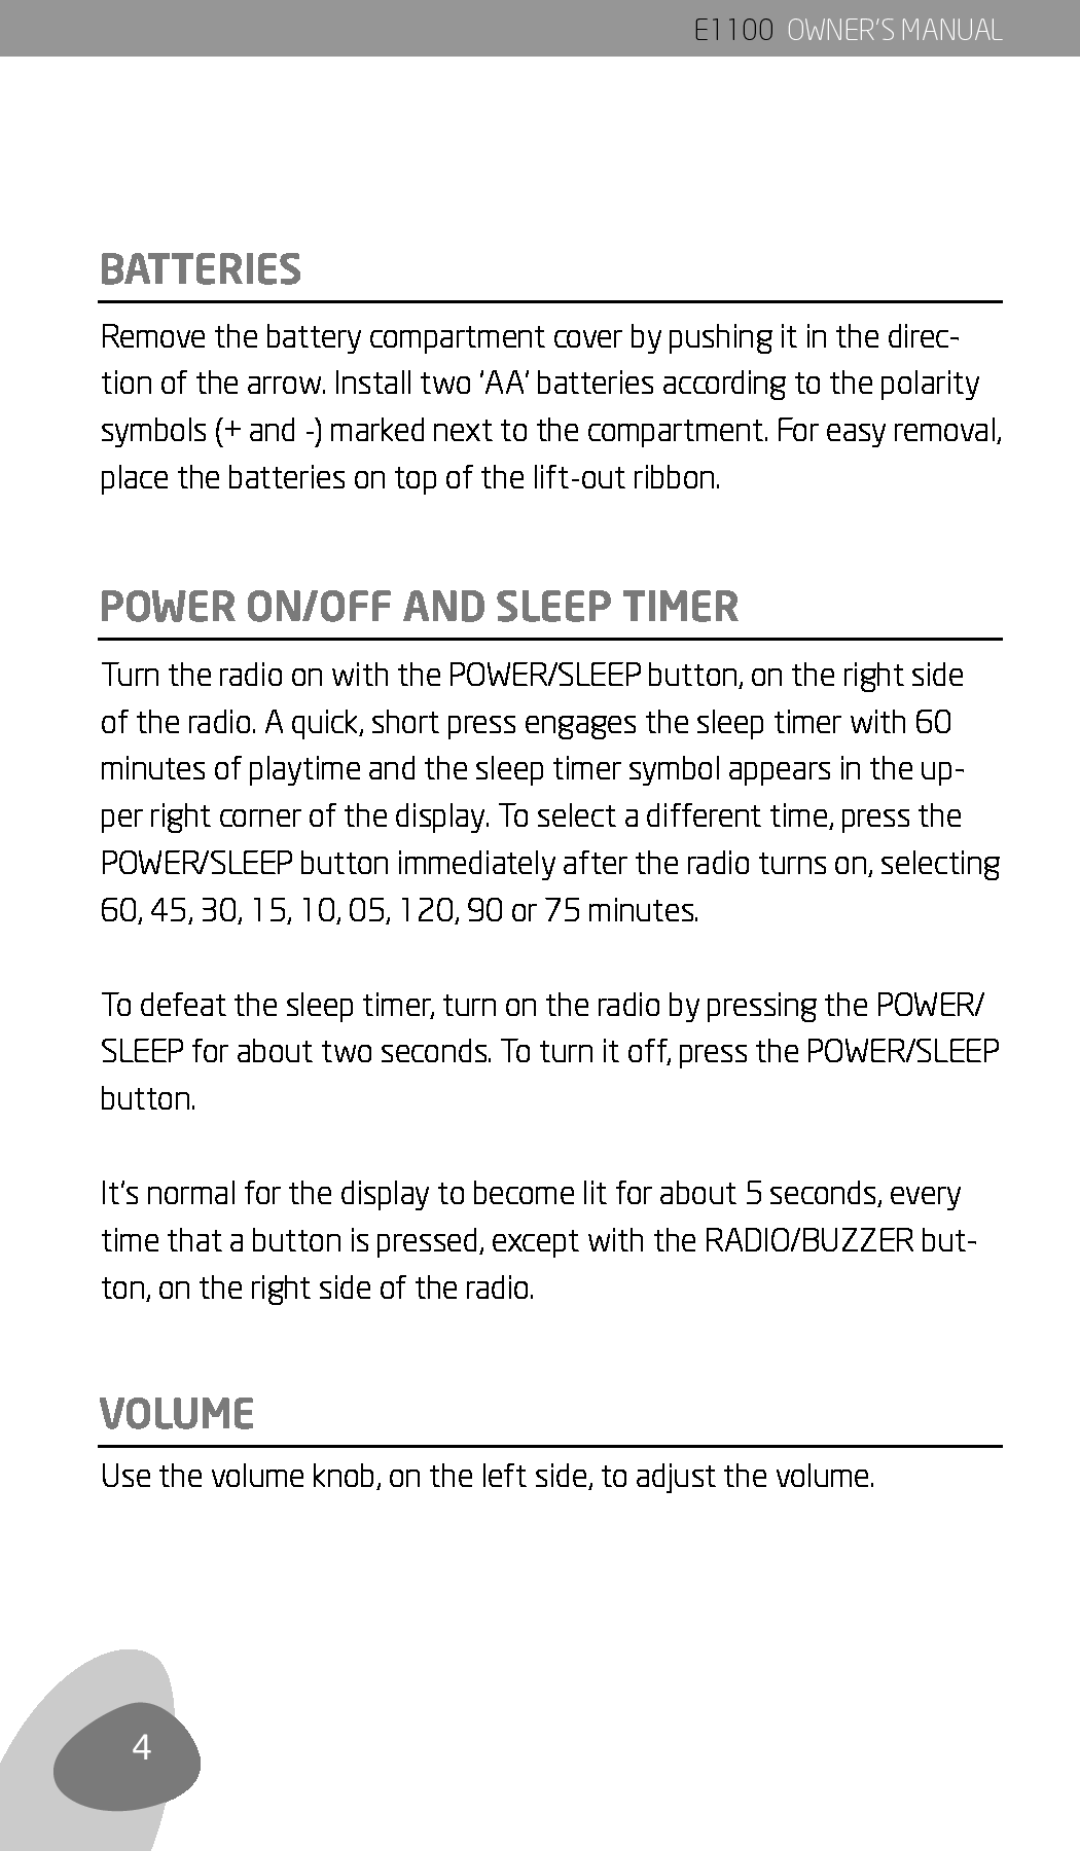 Eton E1100 owner manual Batteries, Power On/Off And Sleep Timer, Volume 